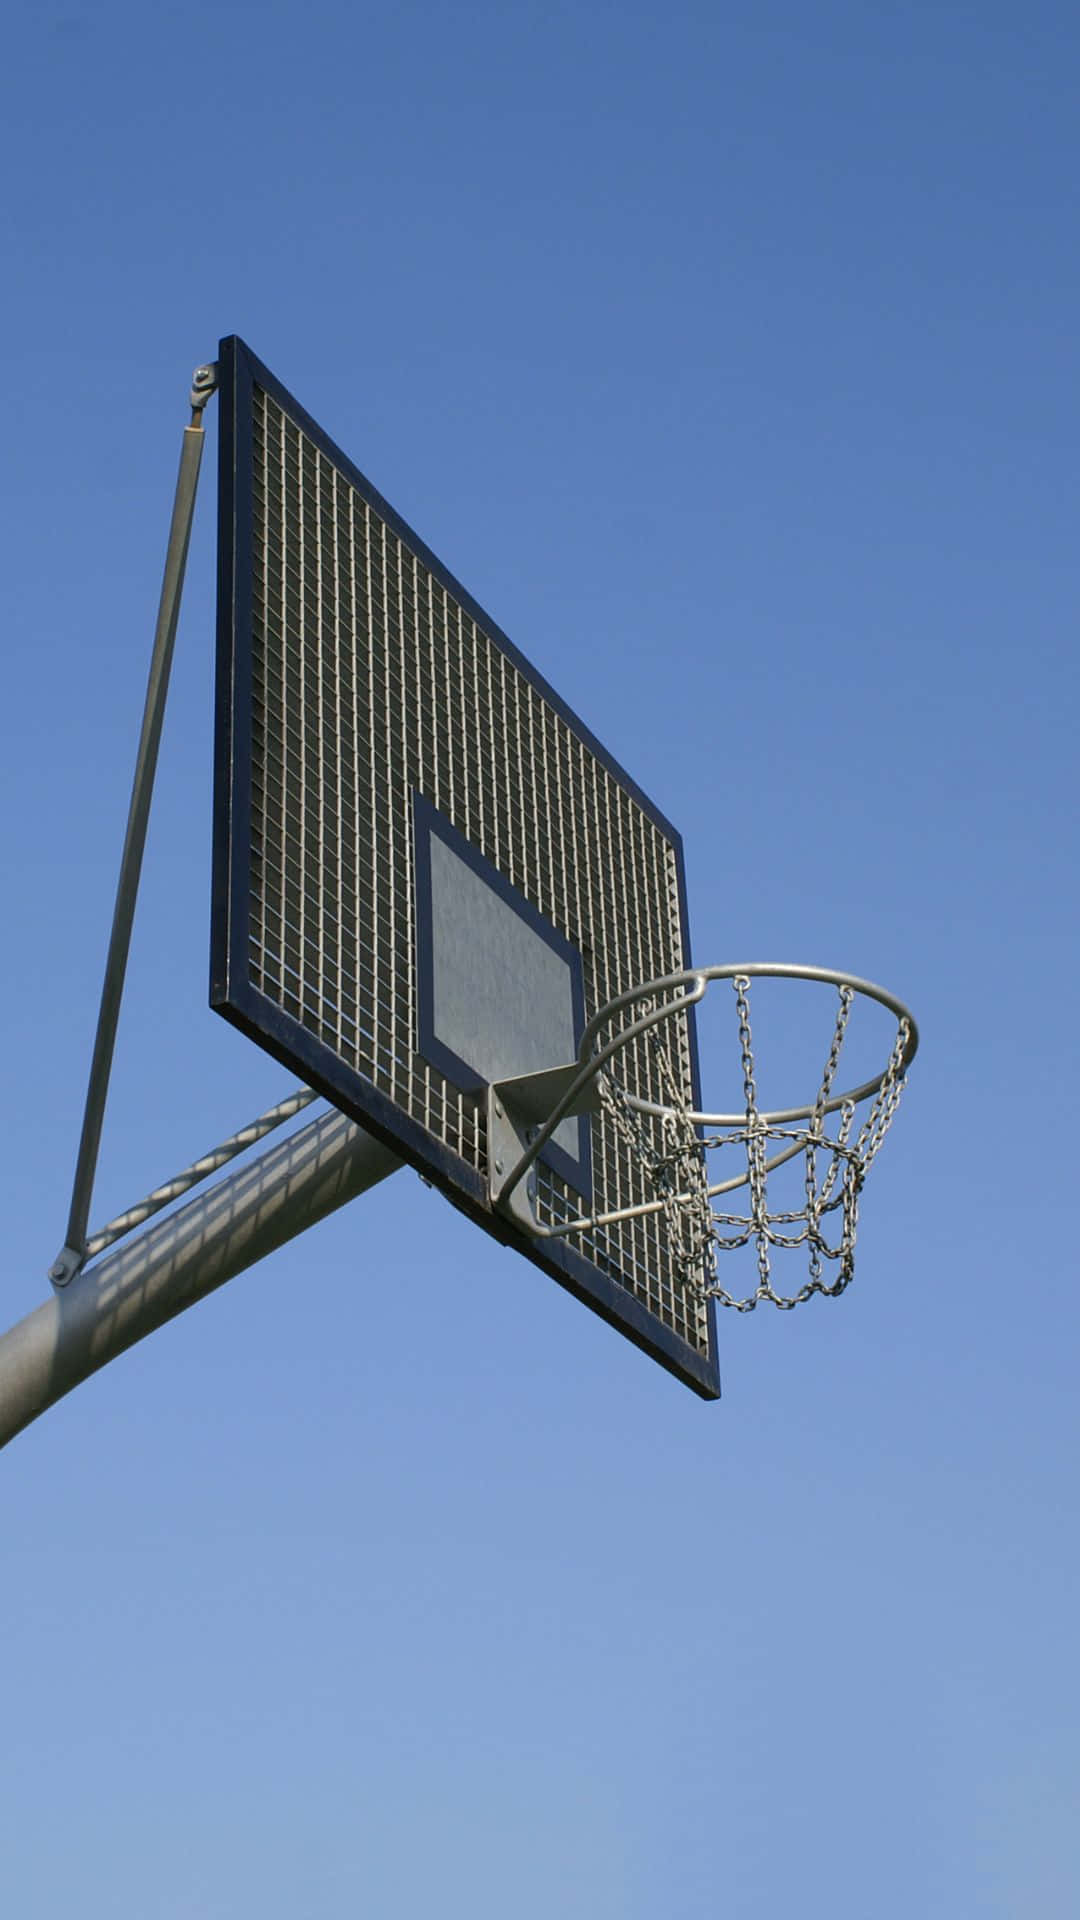 Outdoor Basketball Hoop Against Blue Sky Wallpaper